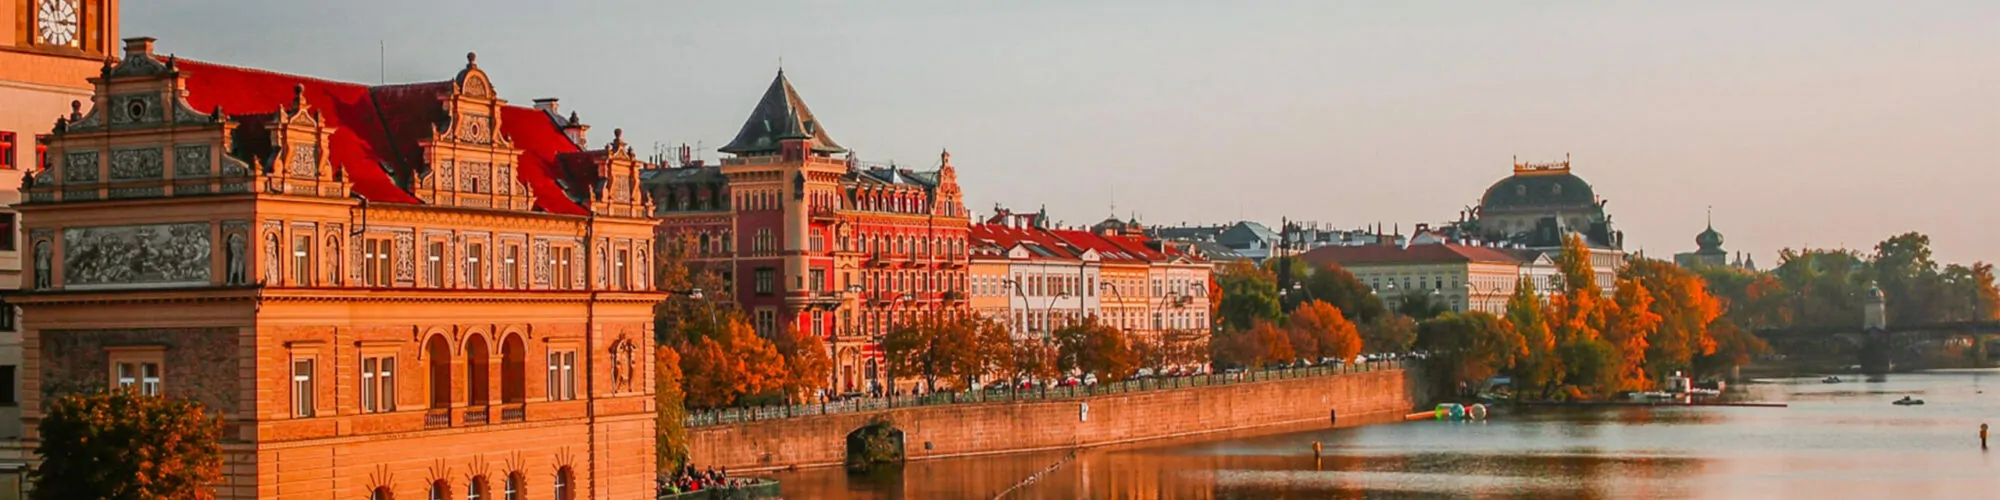 Foto aus Prag, Standort der valantic Transaction Solutions